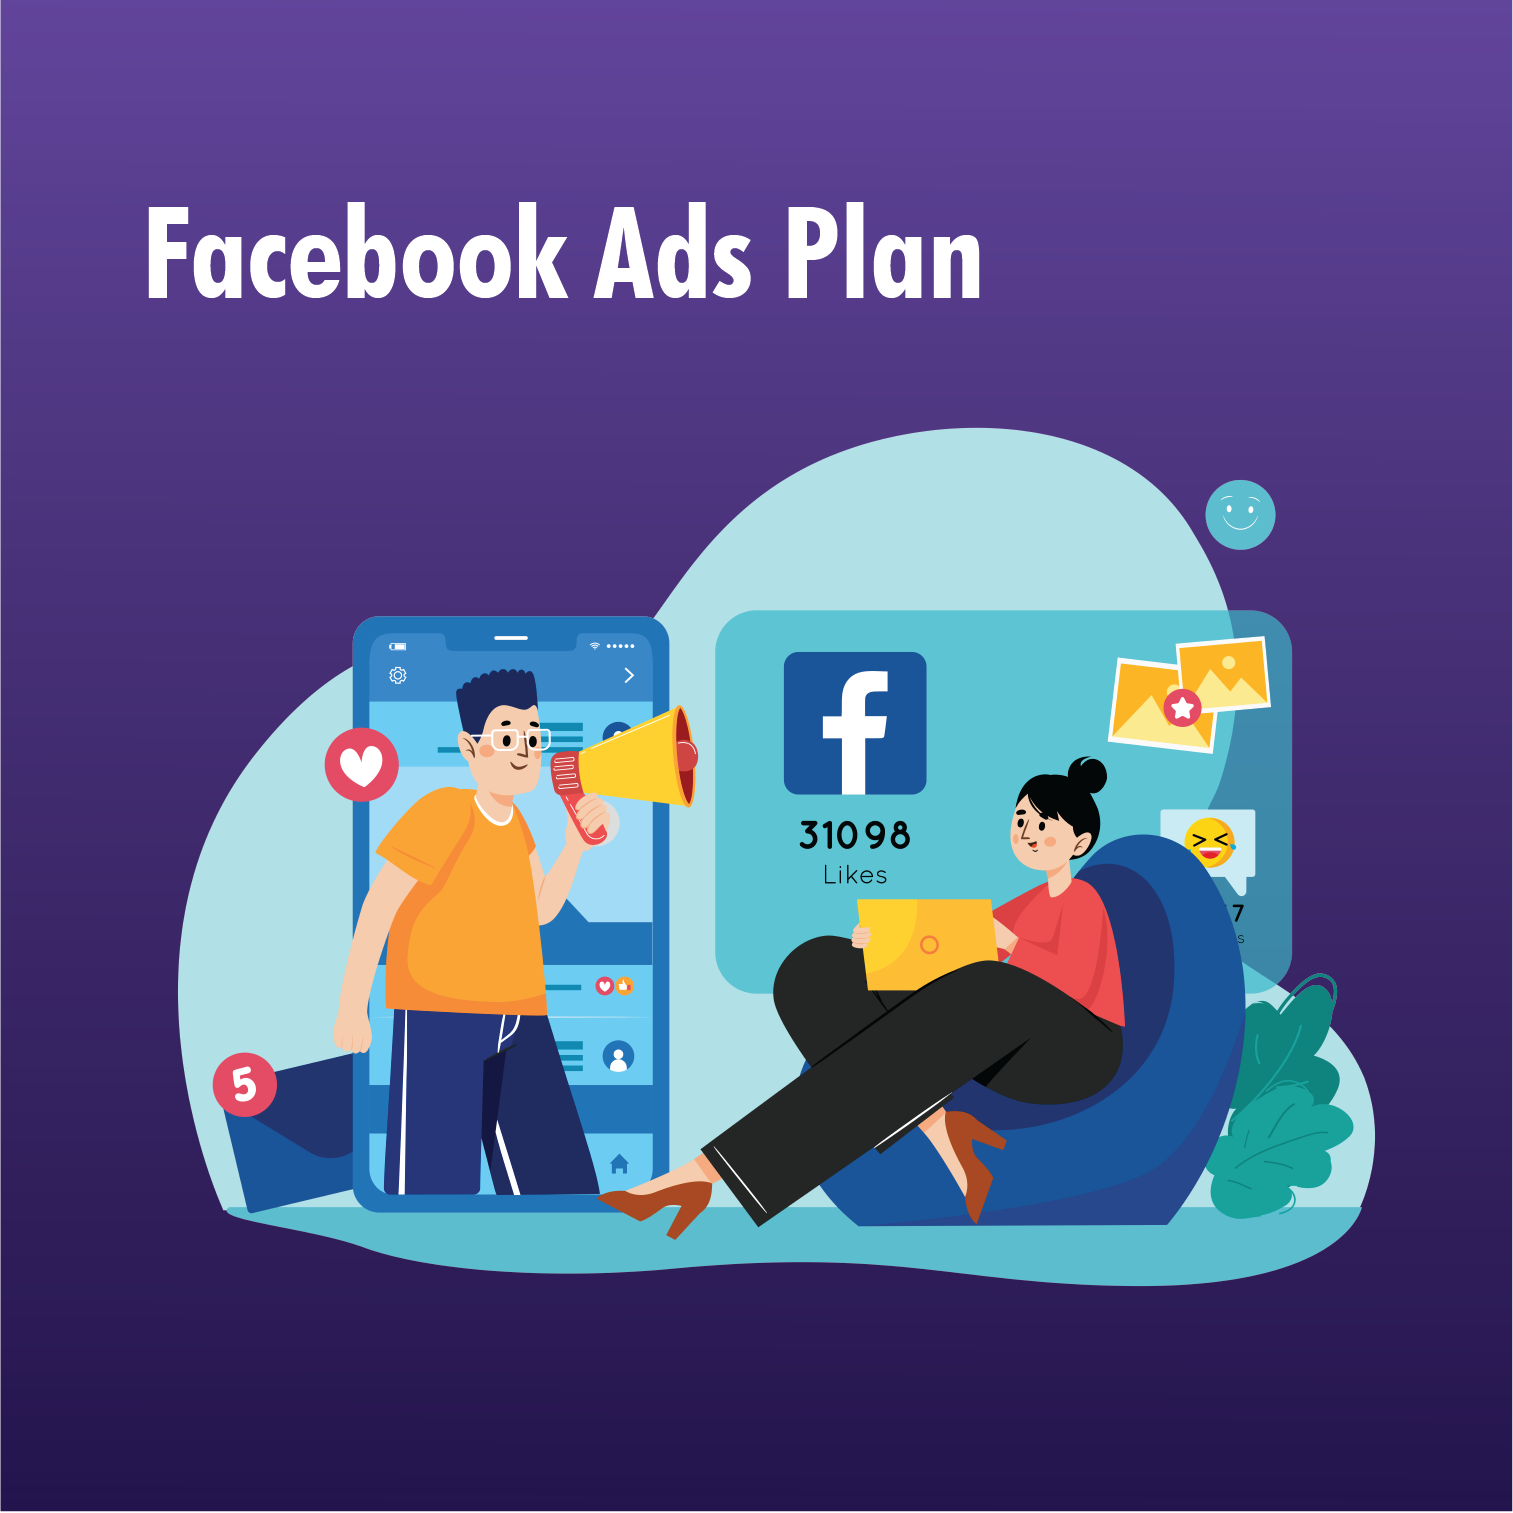 Hire Expert Facebook Ads Services